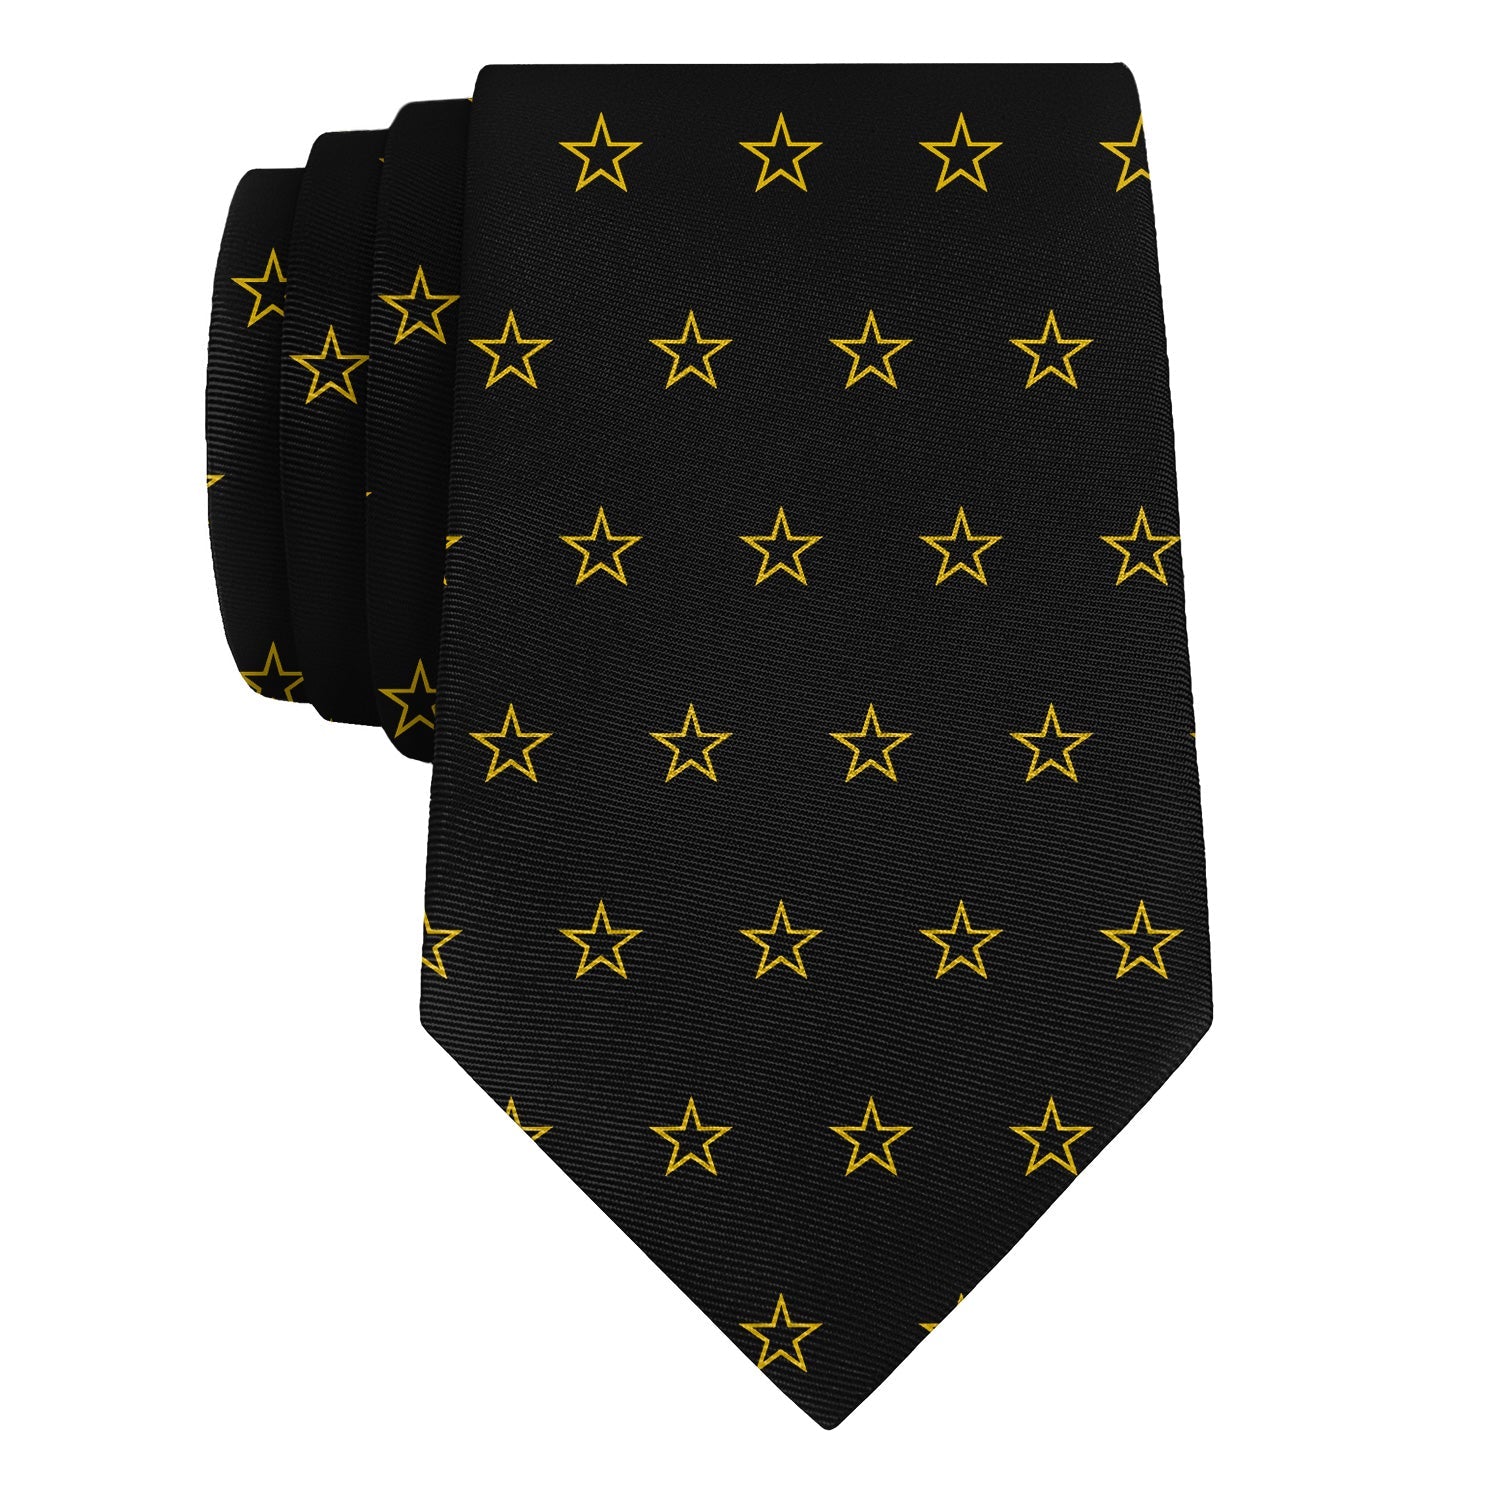 All Stars Necktie - Rolled - Knotty Tie Co.